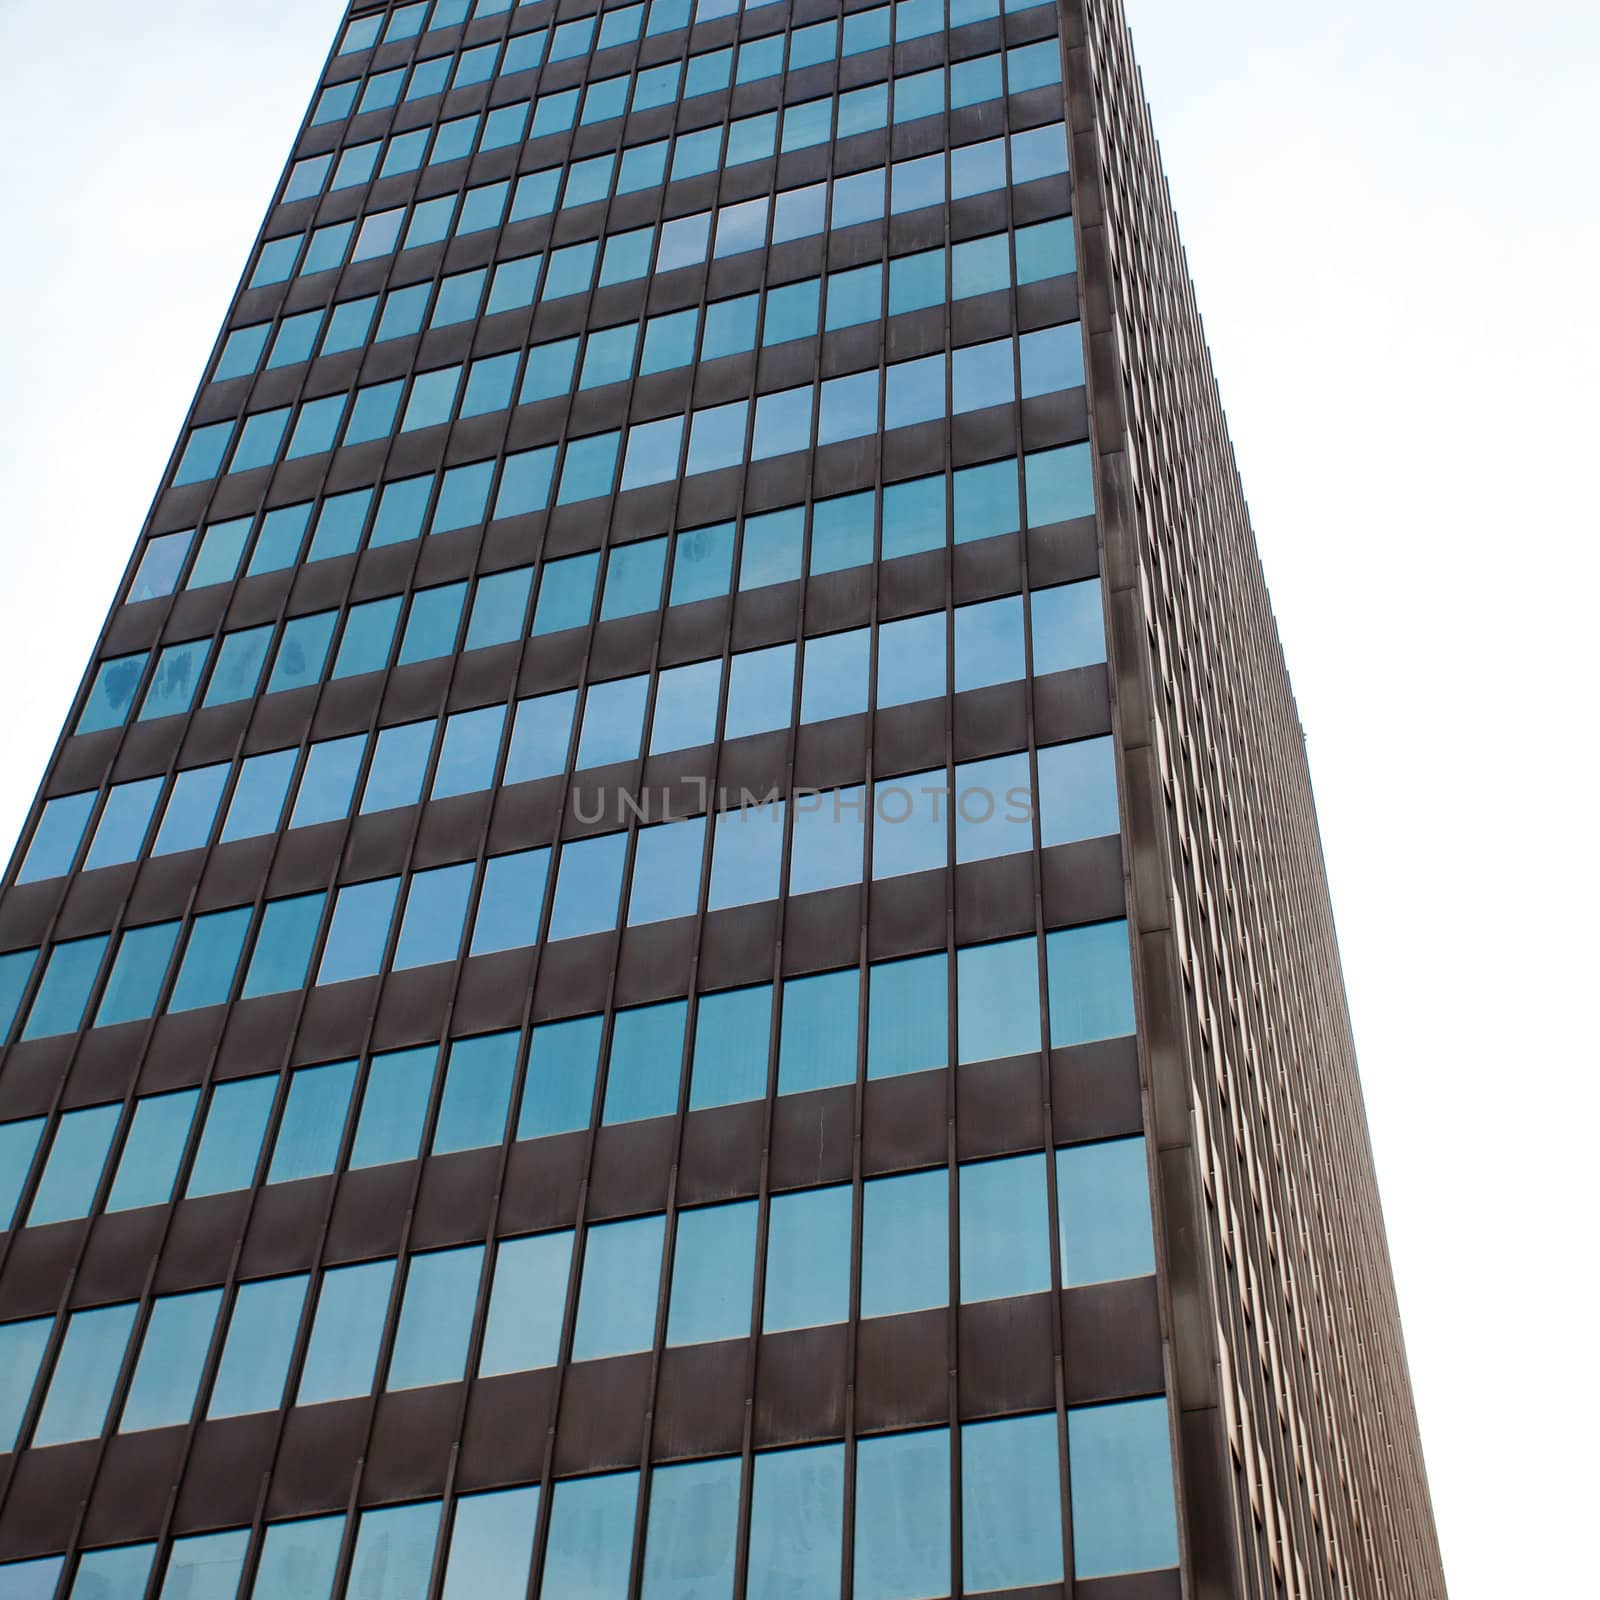 modern office building against the blue sky